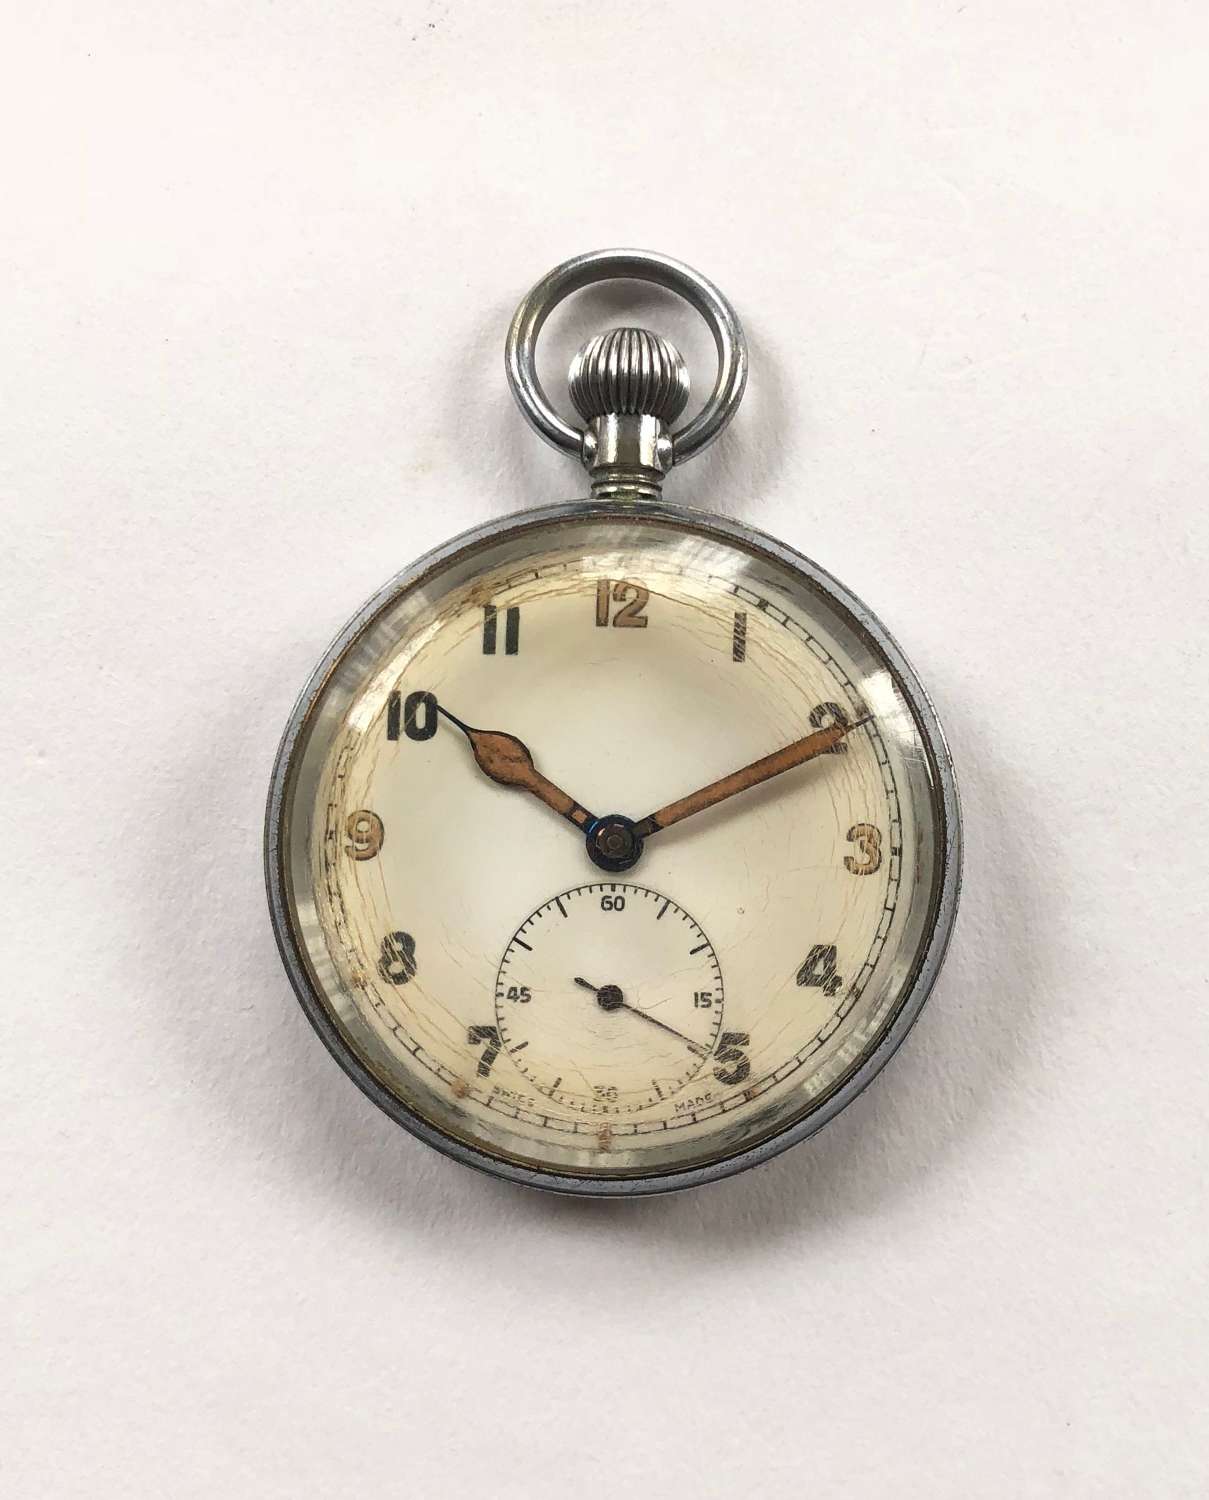 WW2 British Army General Service Time Piece Watch.